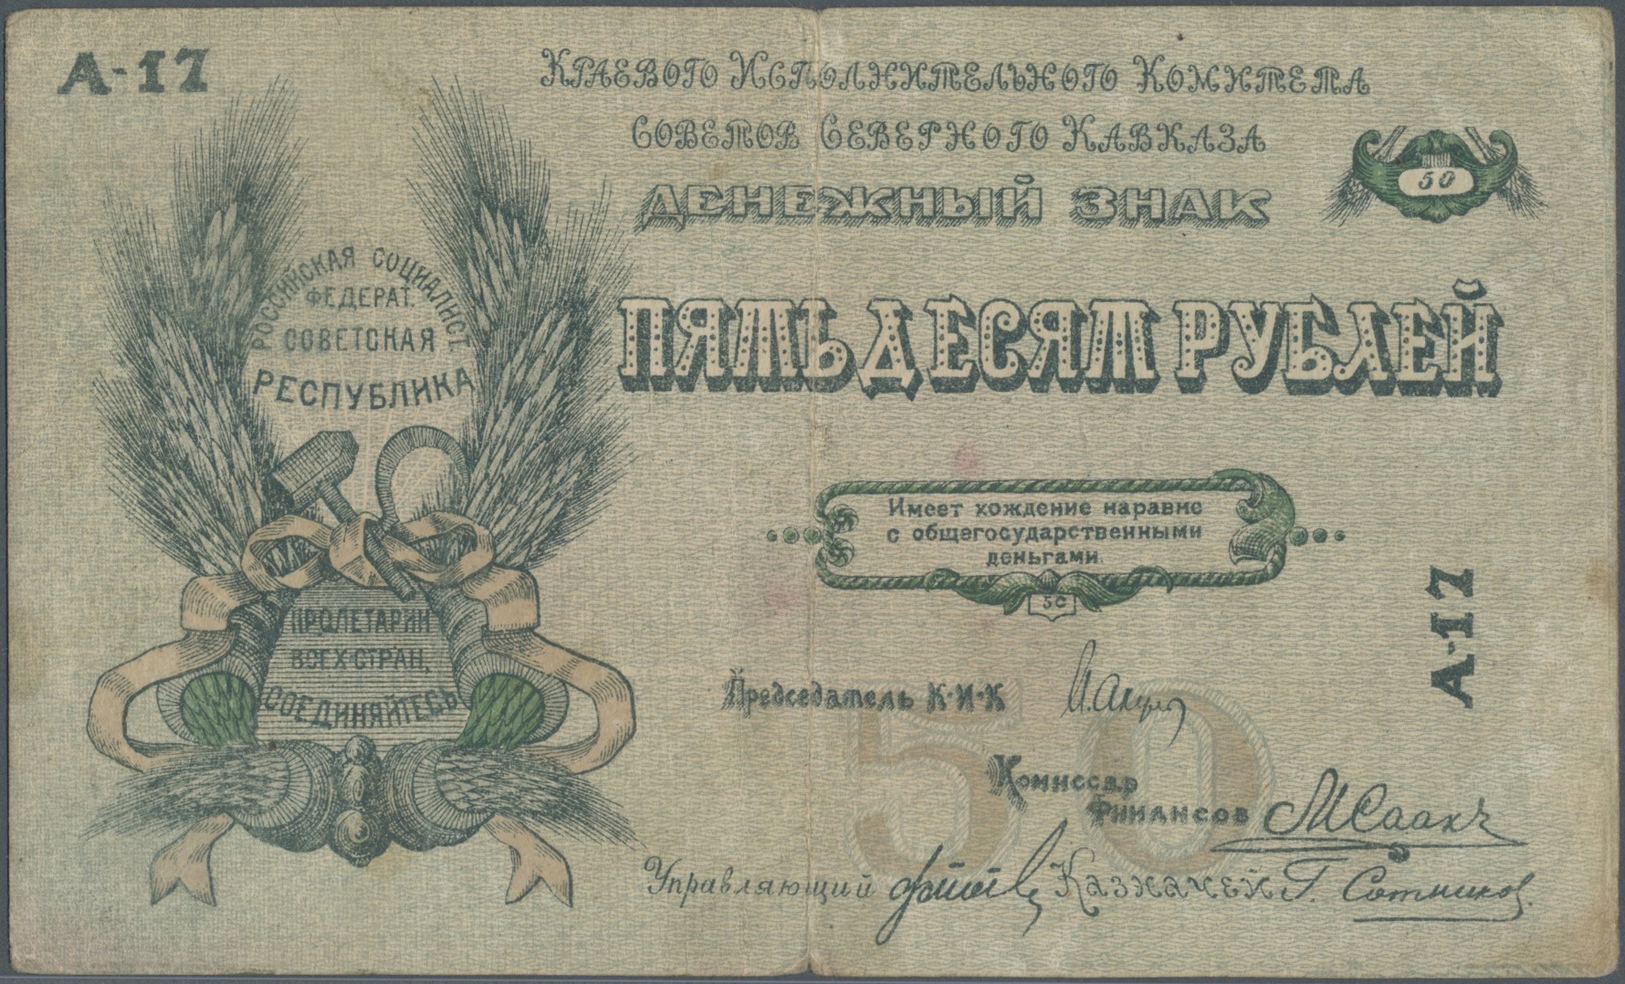 02301 Russia / Russland: North Caucasus 50 Rubles ND P. S457, Stronger Center Fold, Usage In Paper, Conditon: F. - Russia